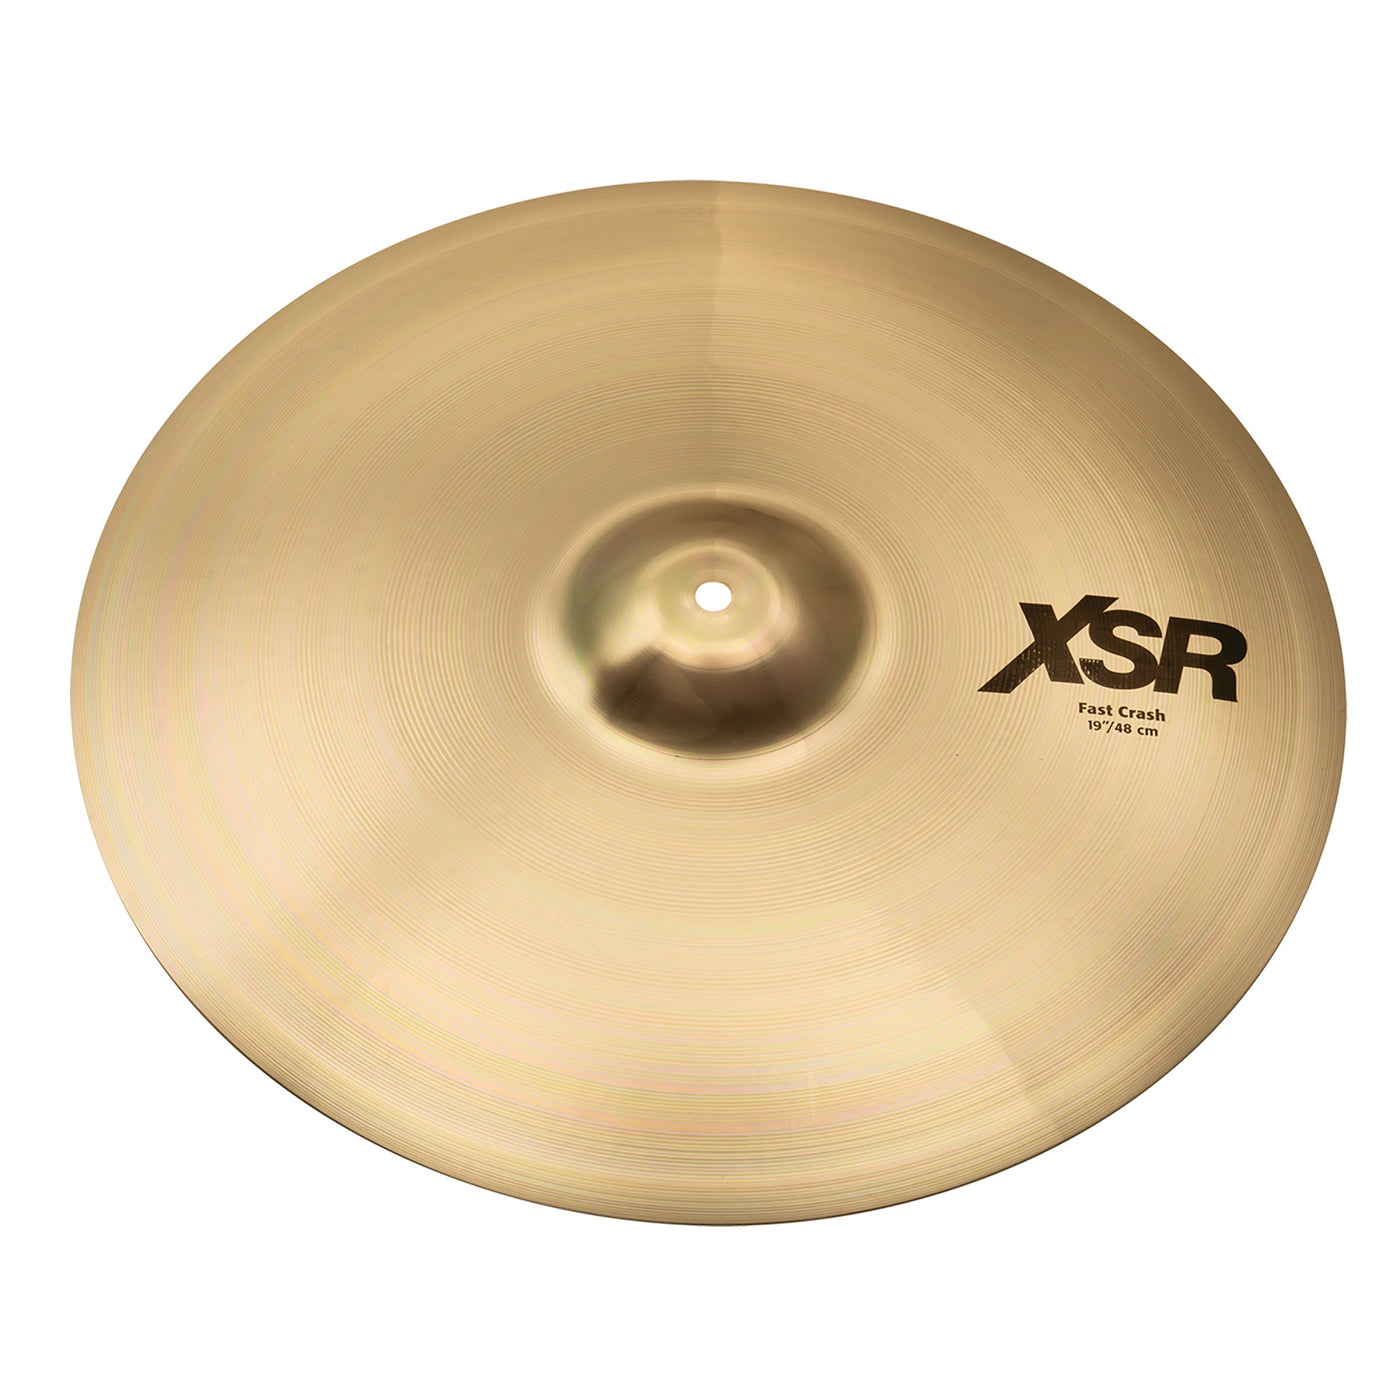 Sabian 19" XSR Fast Crash Cymbal - Brilliant Finish